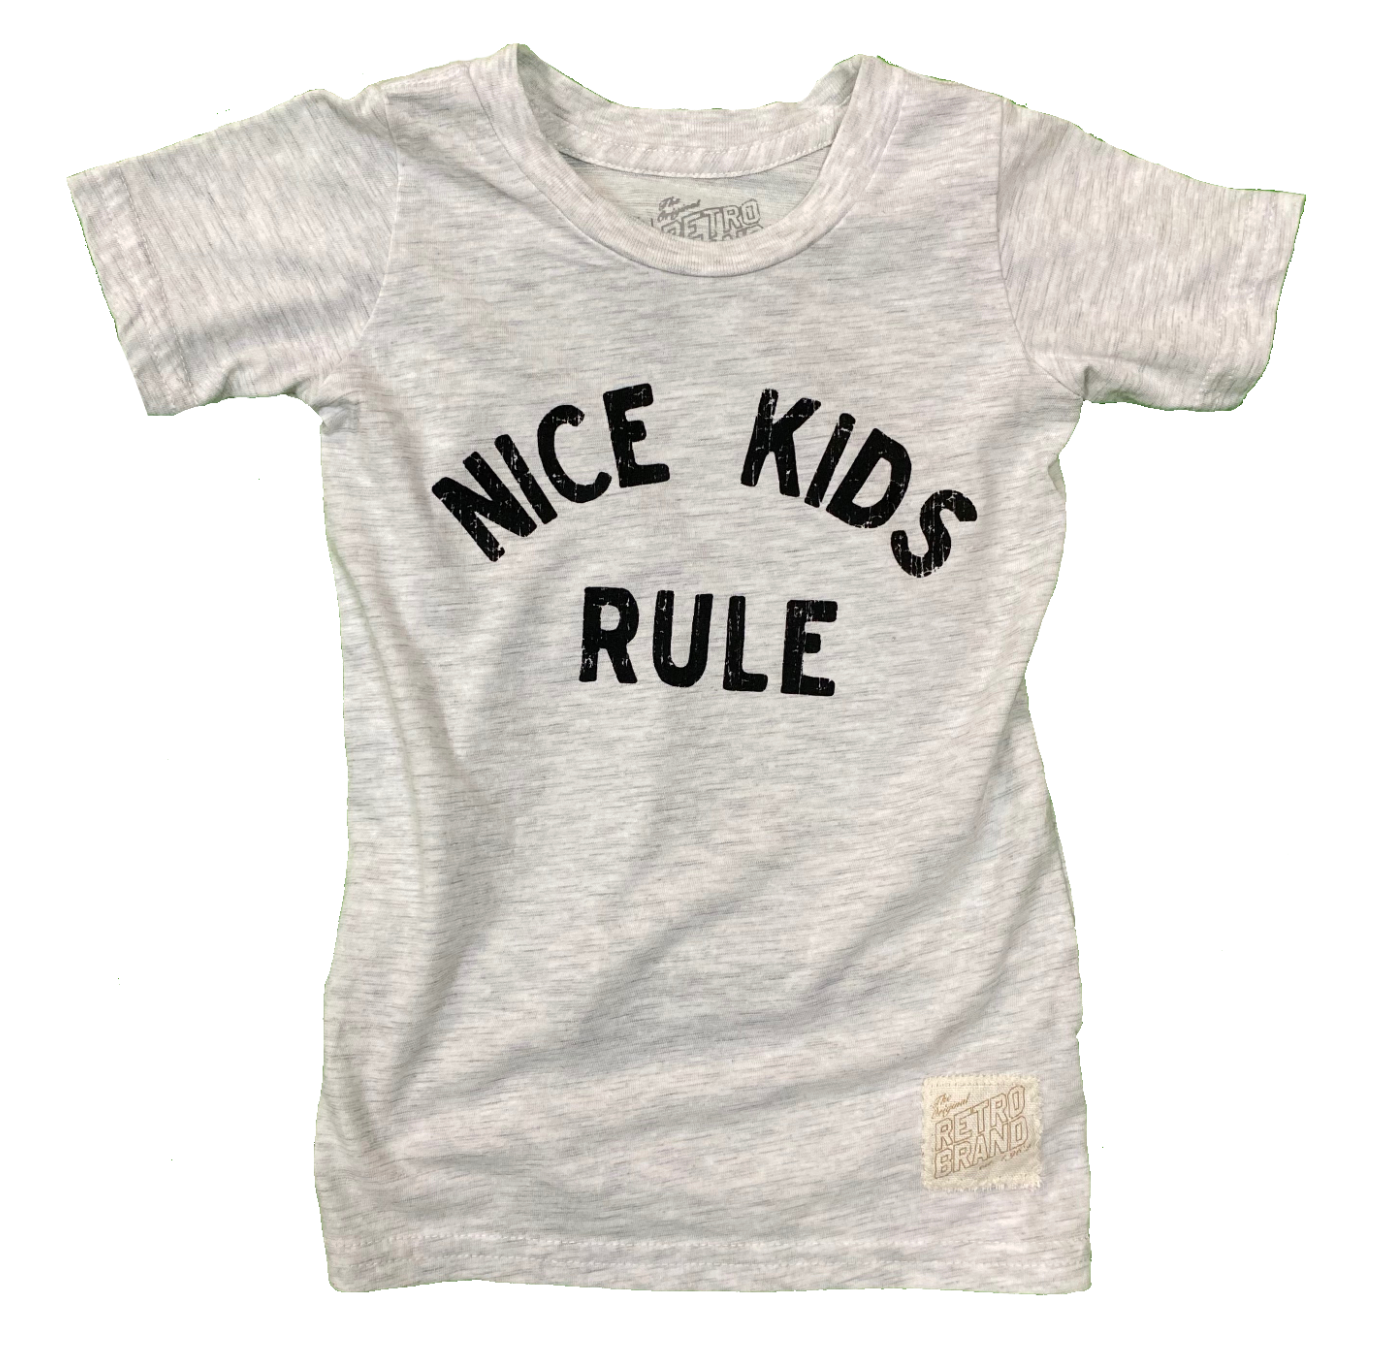 Nice Kids Rule Tri-Blend Tee (Toddler/Youth)